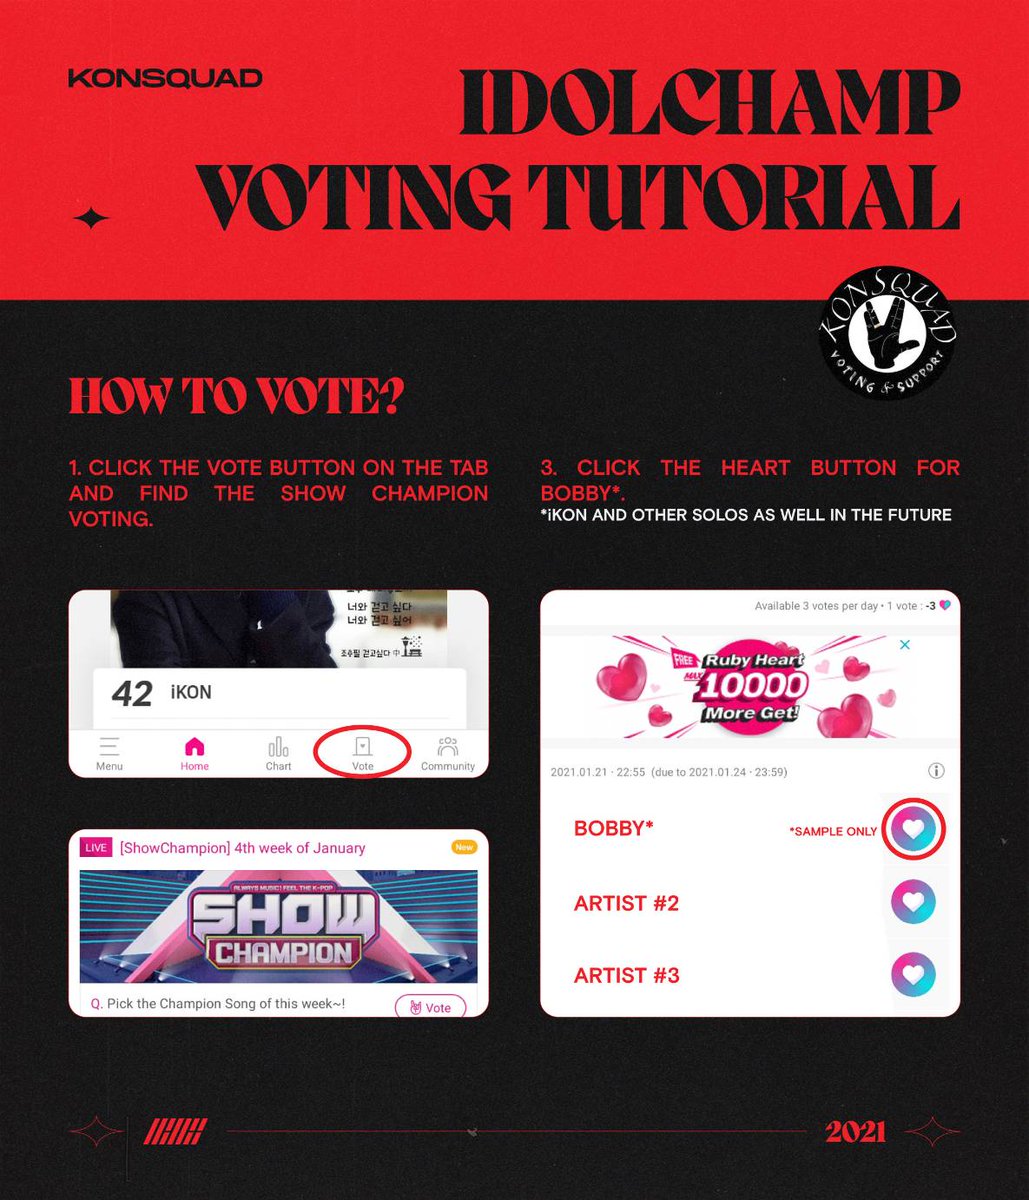 Voting on IdolchampVotes: 3 per ID, per dayVoting period: 6pm KST Thursdays to 11:59pm KST Sundays #iKON  #아이콘  @YG_iKONIC